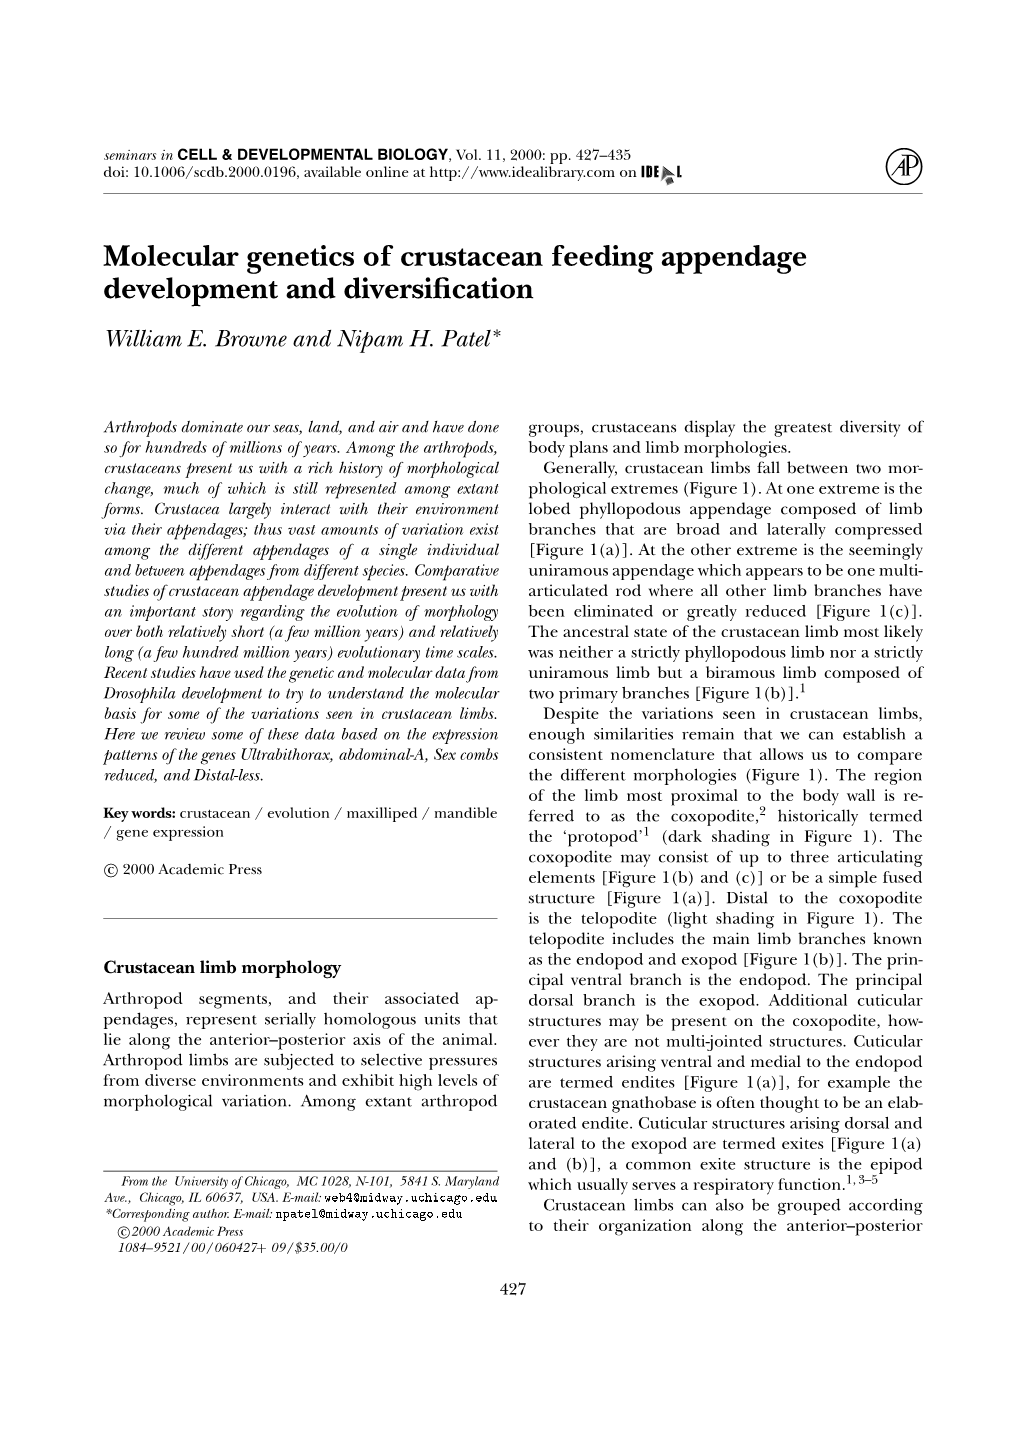 Molecular Genetics of Crustacean Feeding Appendage Development and Diversification